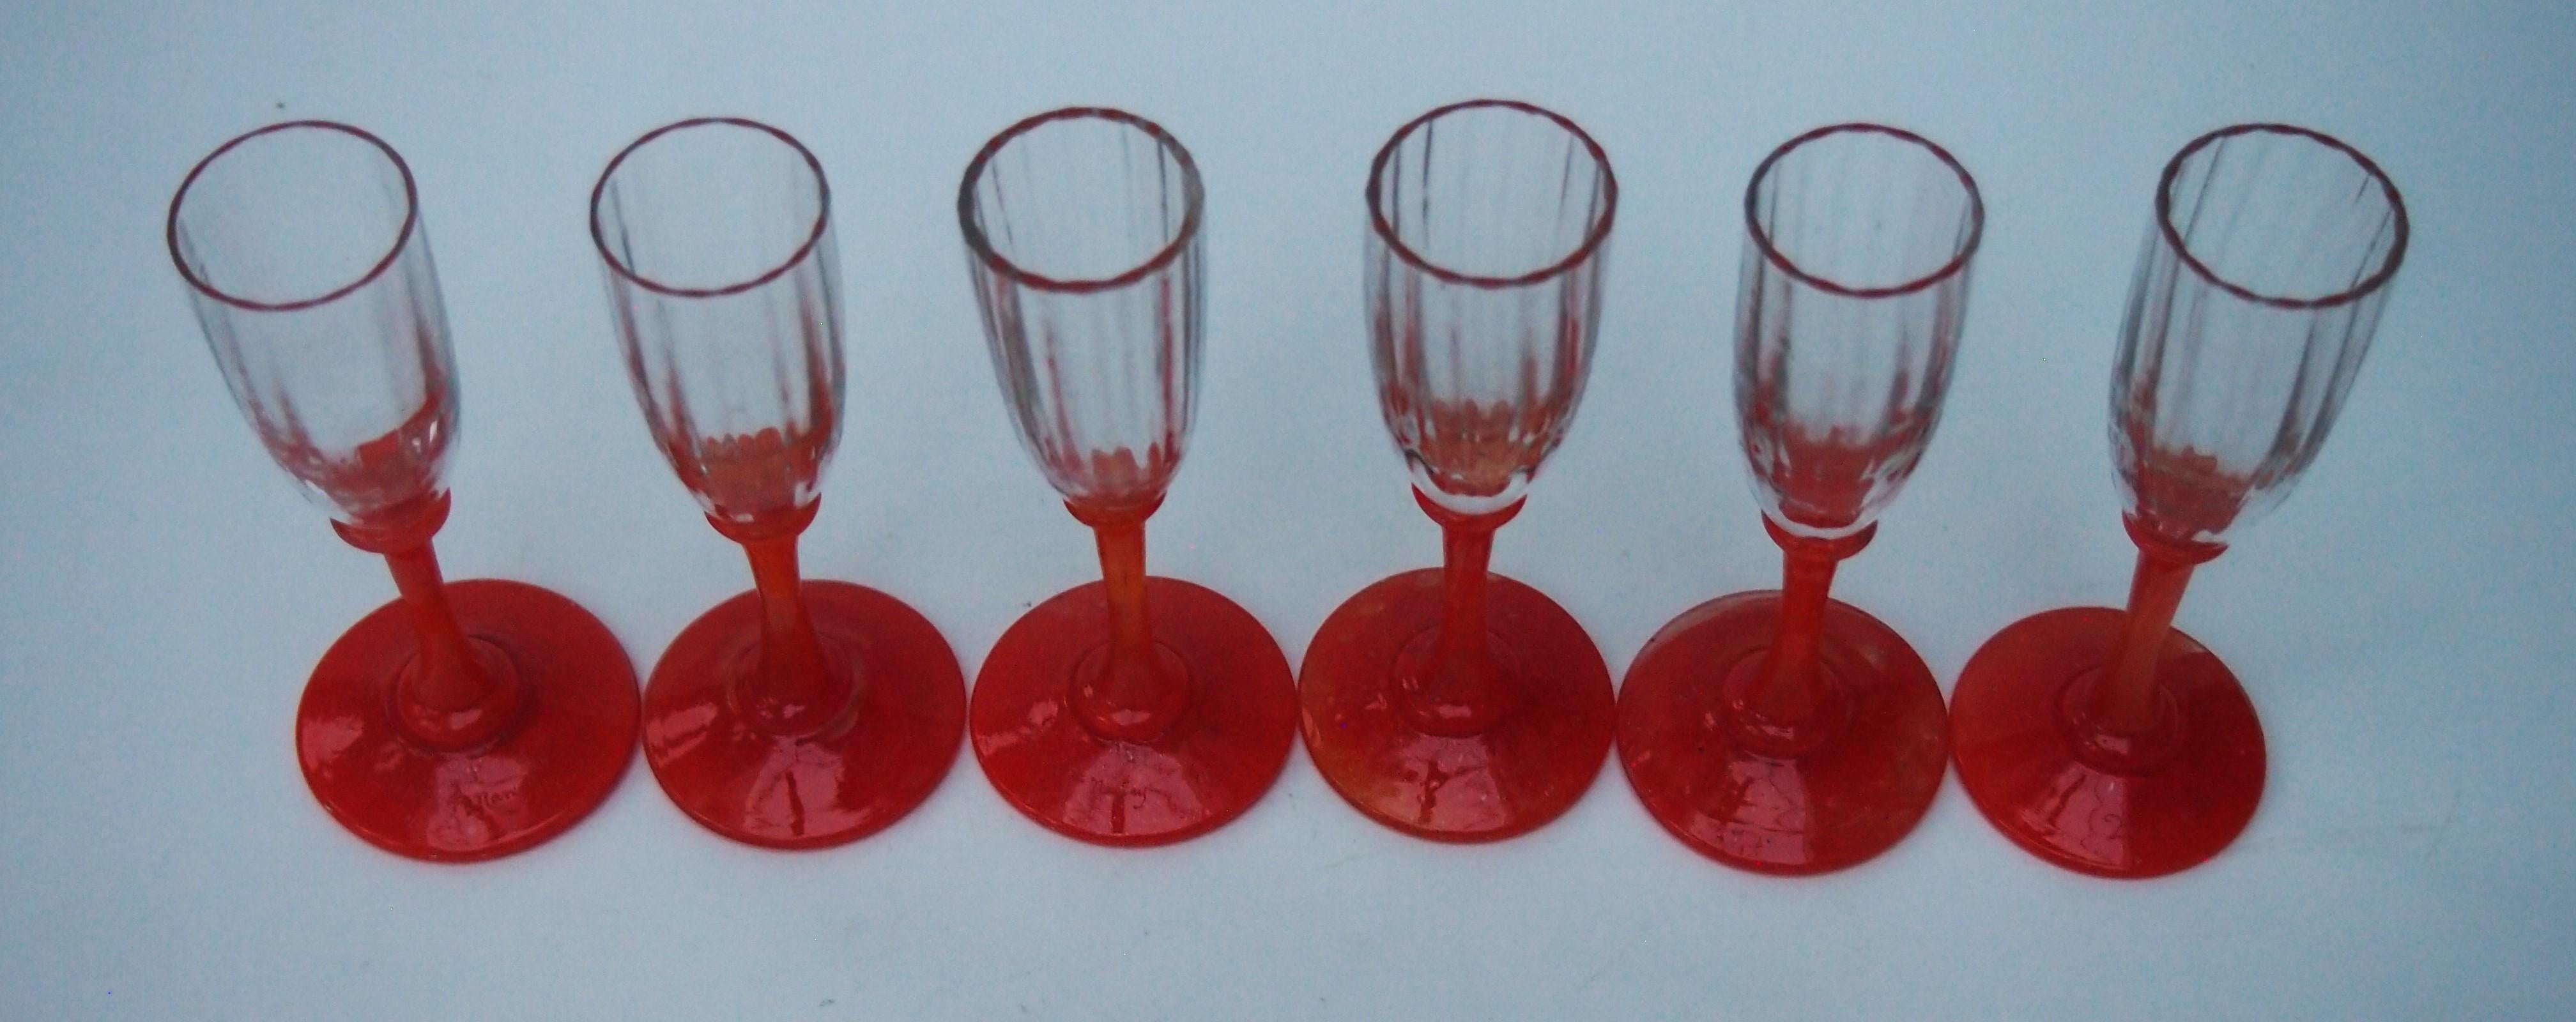 Art Glass Set of 6 Daum Orange footed tiny Liquor glasses signed c 1920 For Sale